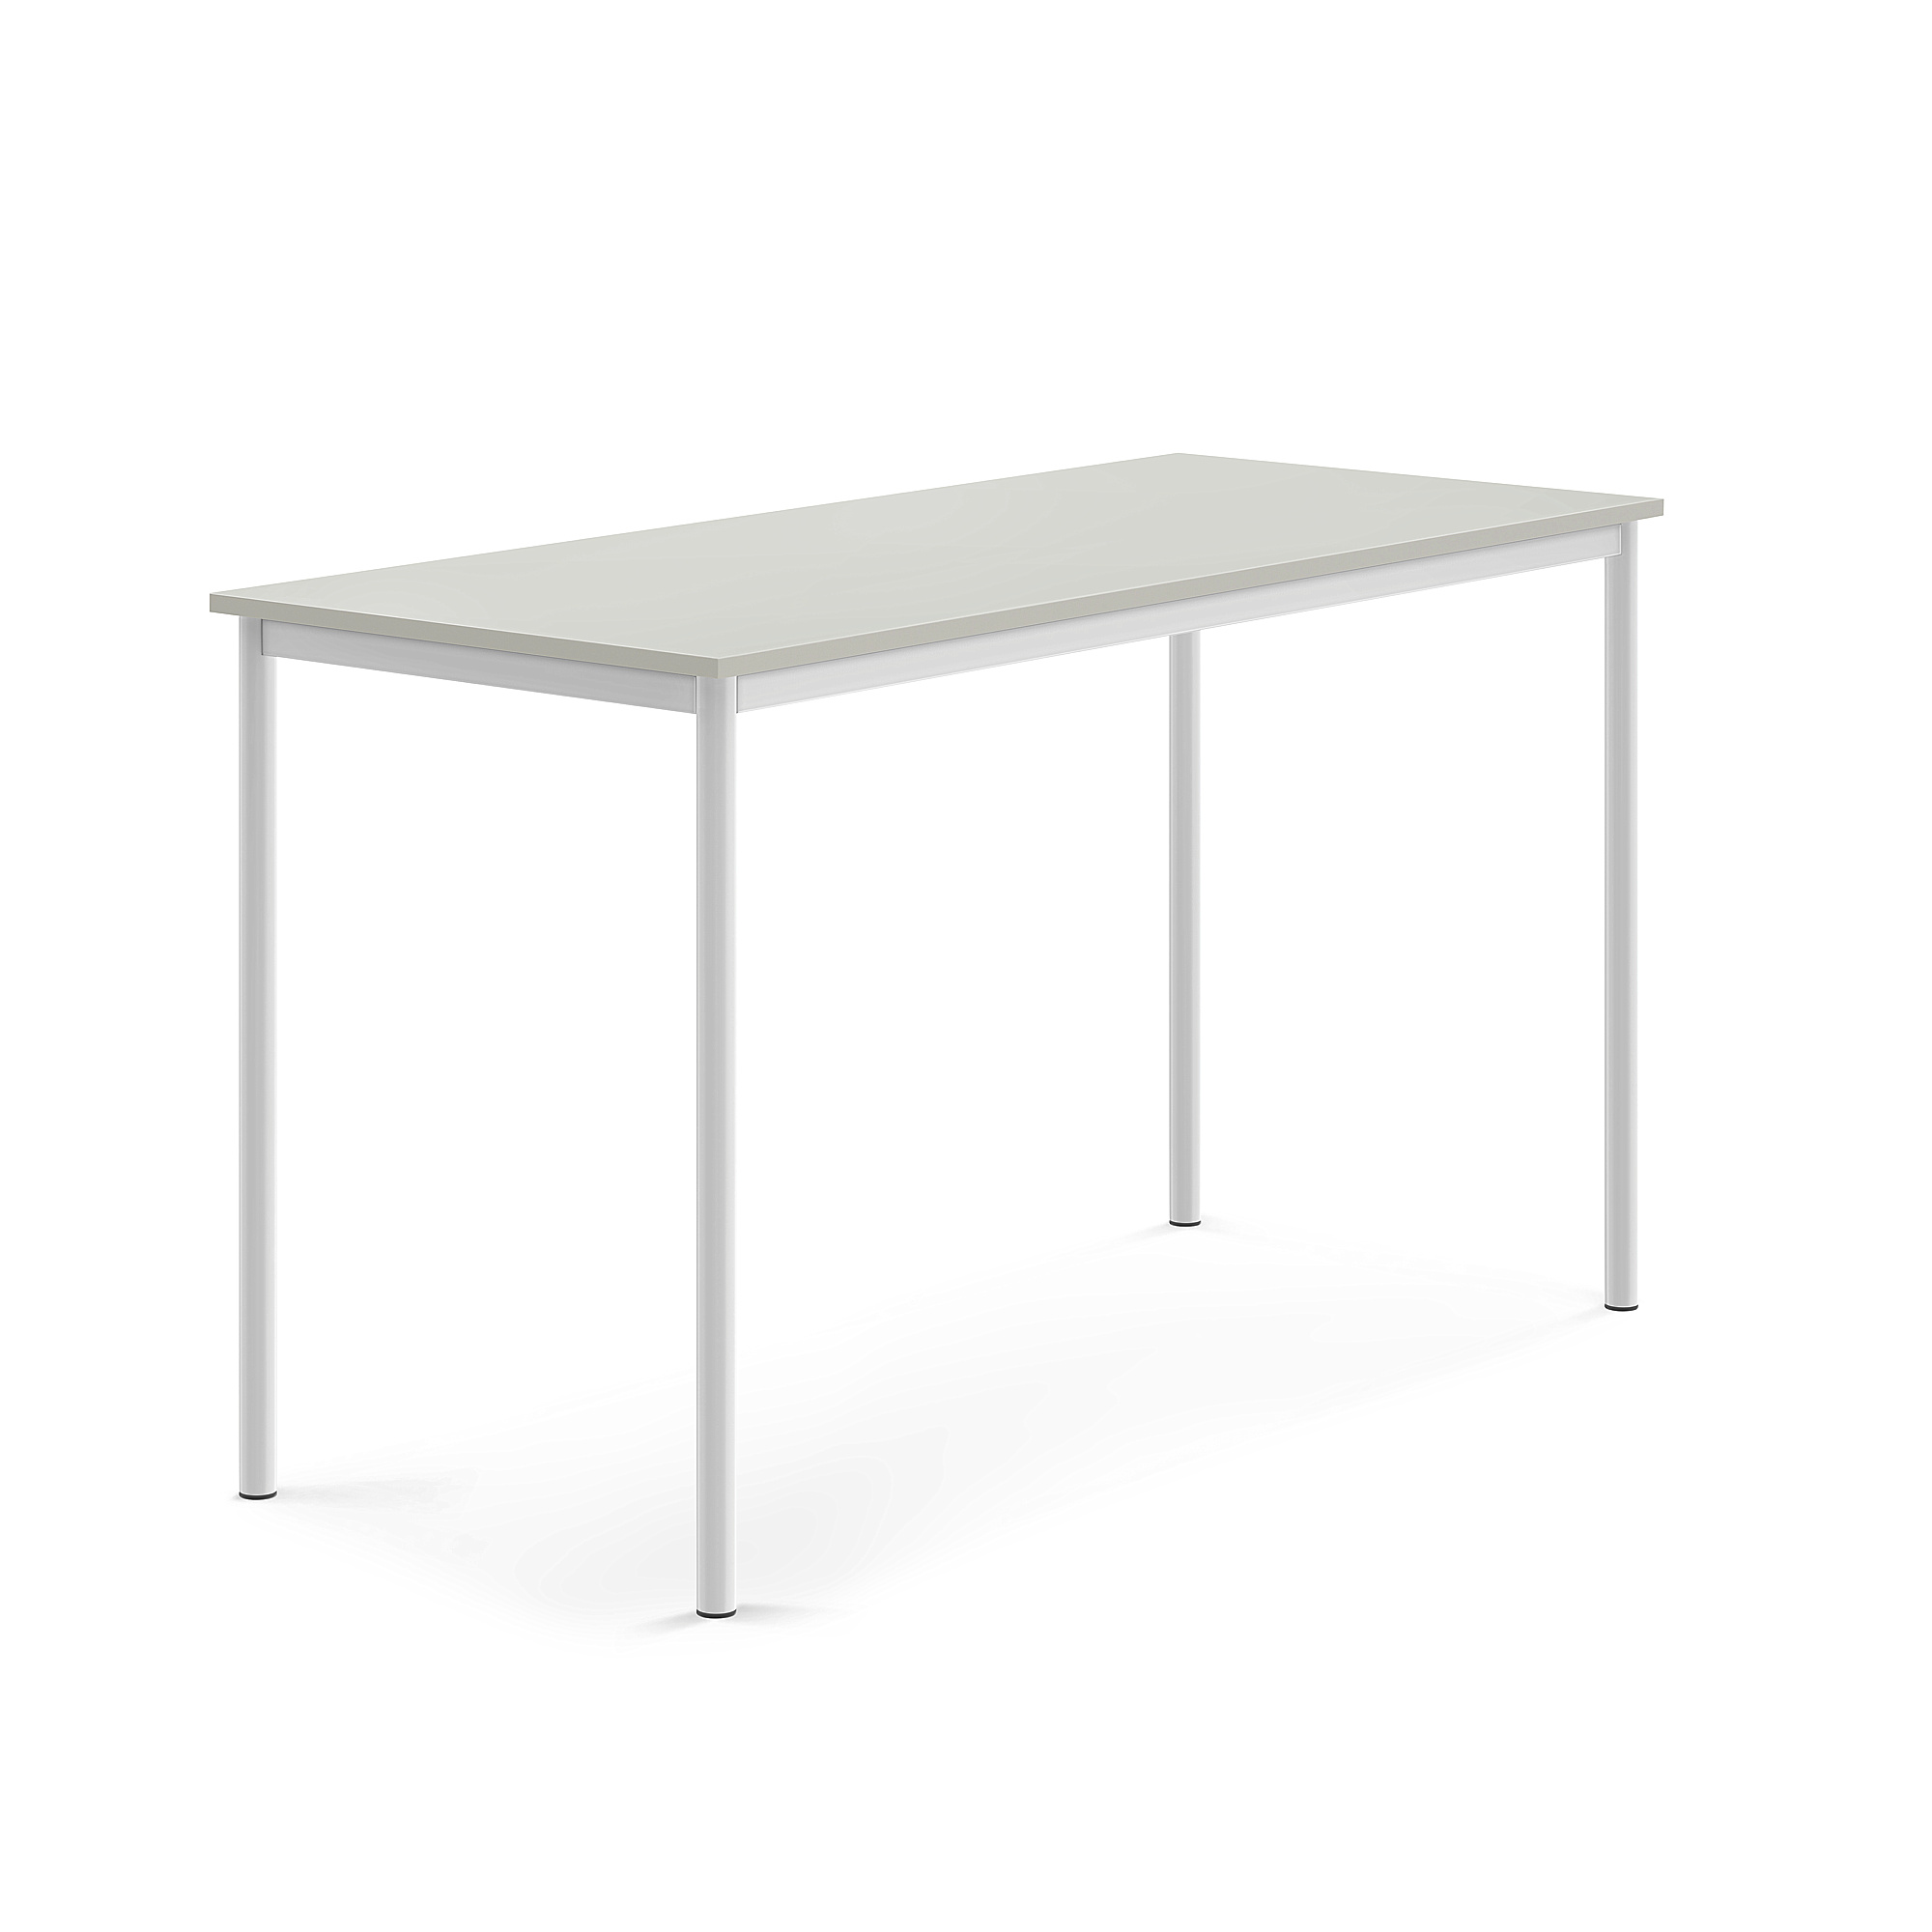 Stůl SONITUS, 1600x700x900 mm, bílé nohy, HPL deska tlumící hluk, šedá